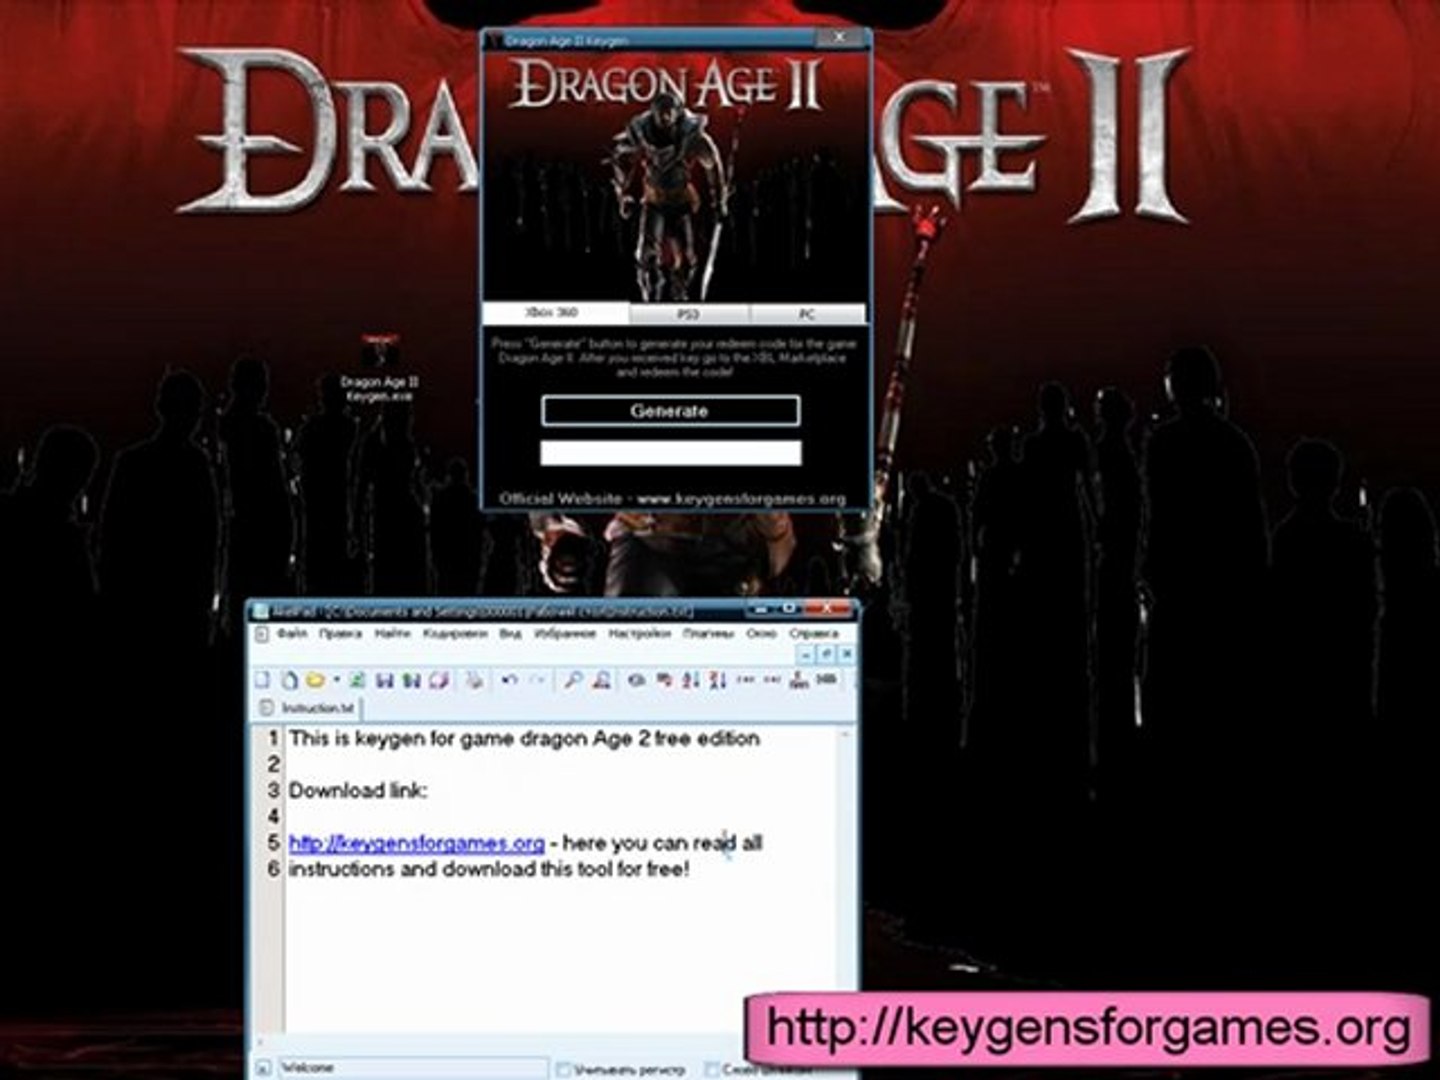 Verstikken Heerlijk Weinig Free Dragon Age 2 Game and Codes Xbox 360, PS3 and PC – Видео Dailymotion